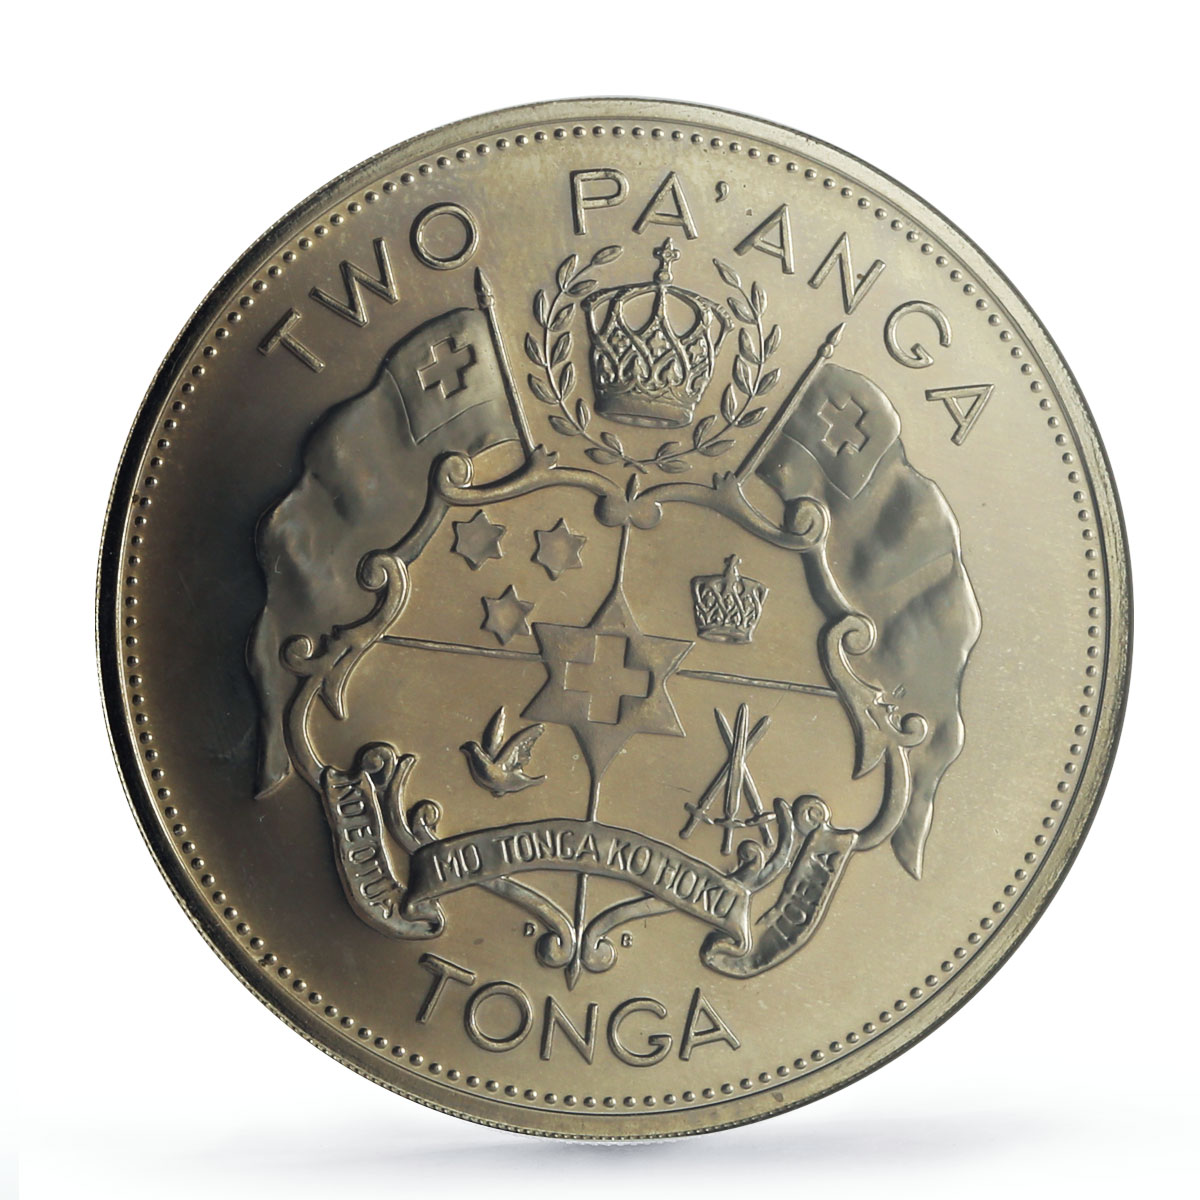 Tonga 2 paanga Coronation King Tupou IV Politics KM-19 PF66 NGC CuNi coin 1967